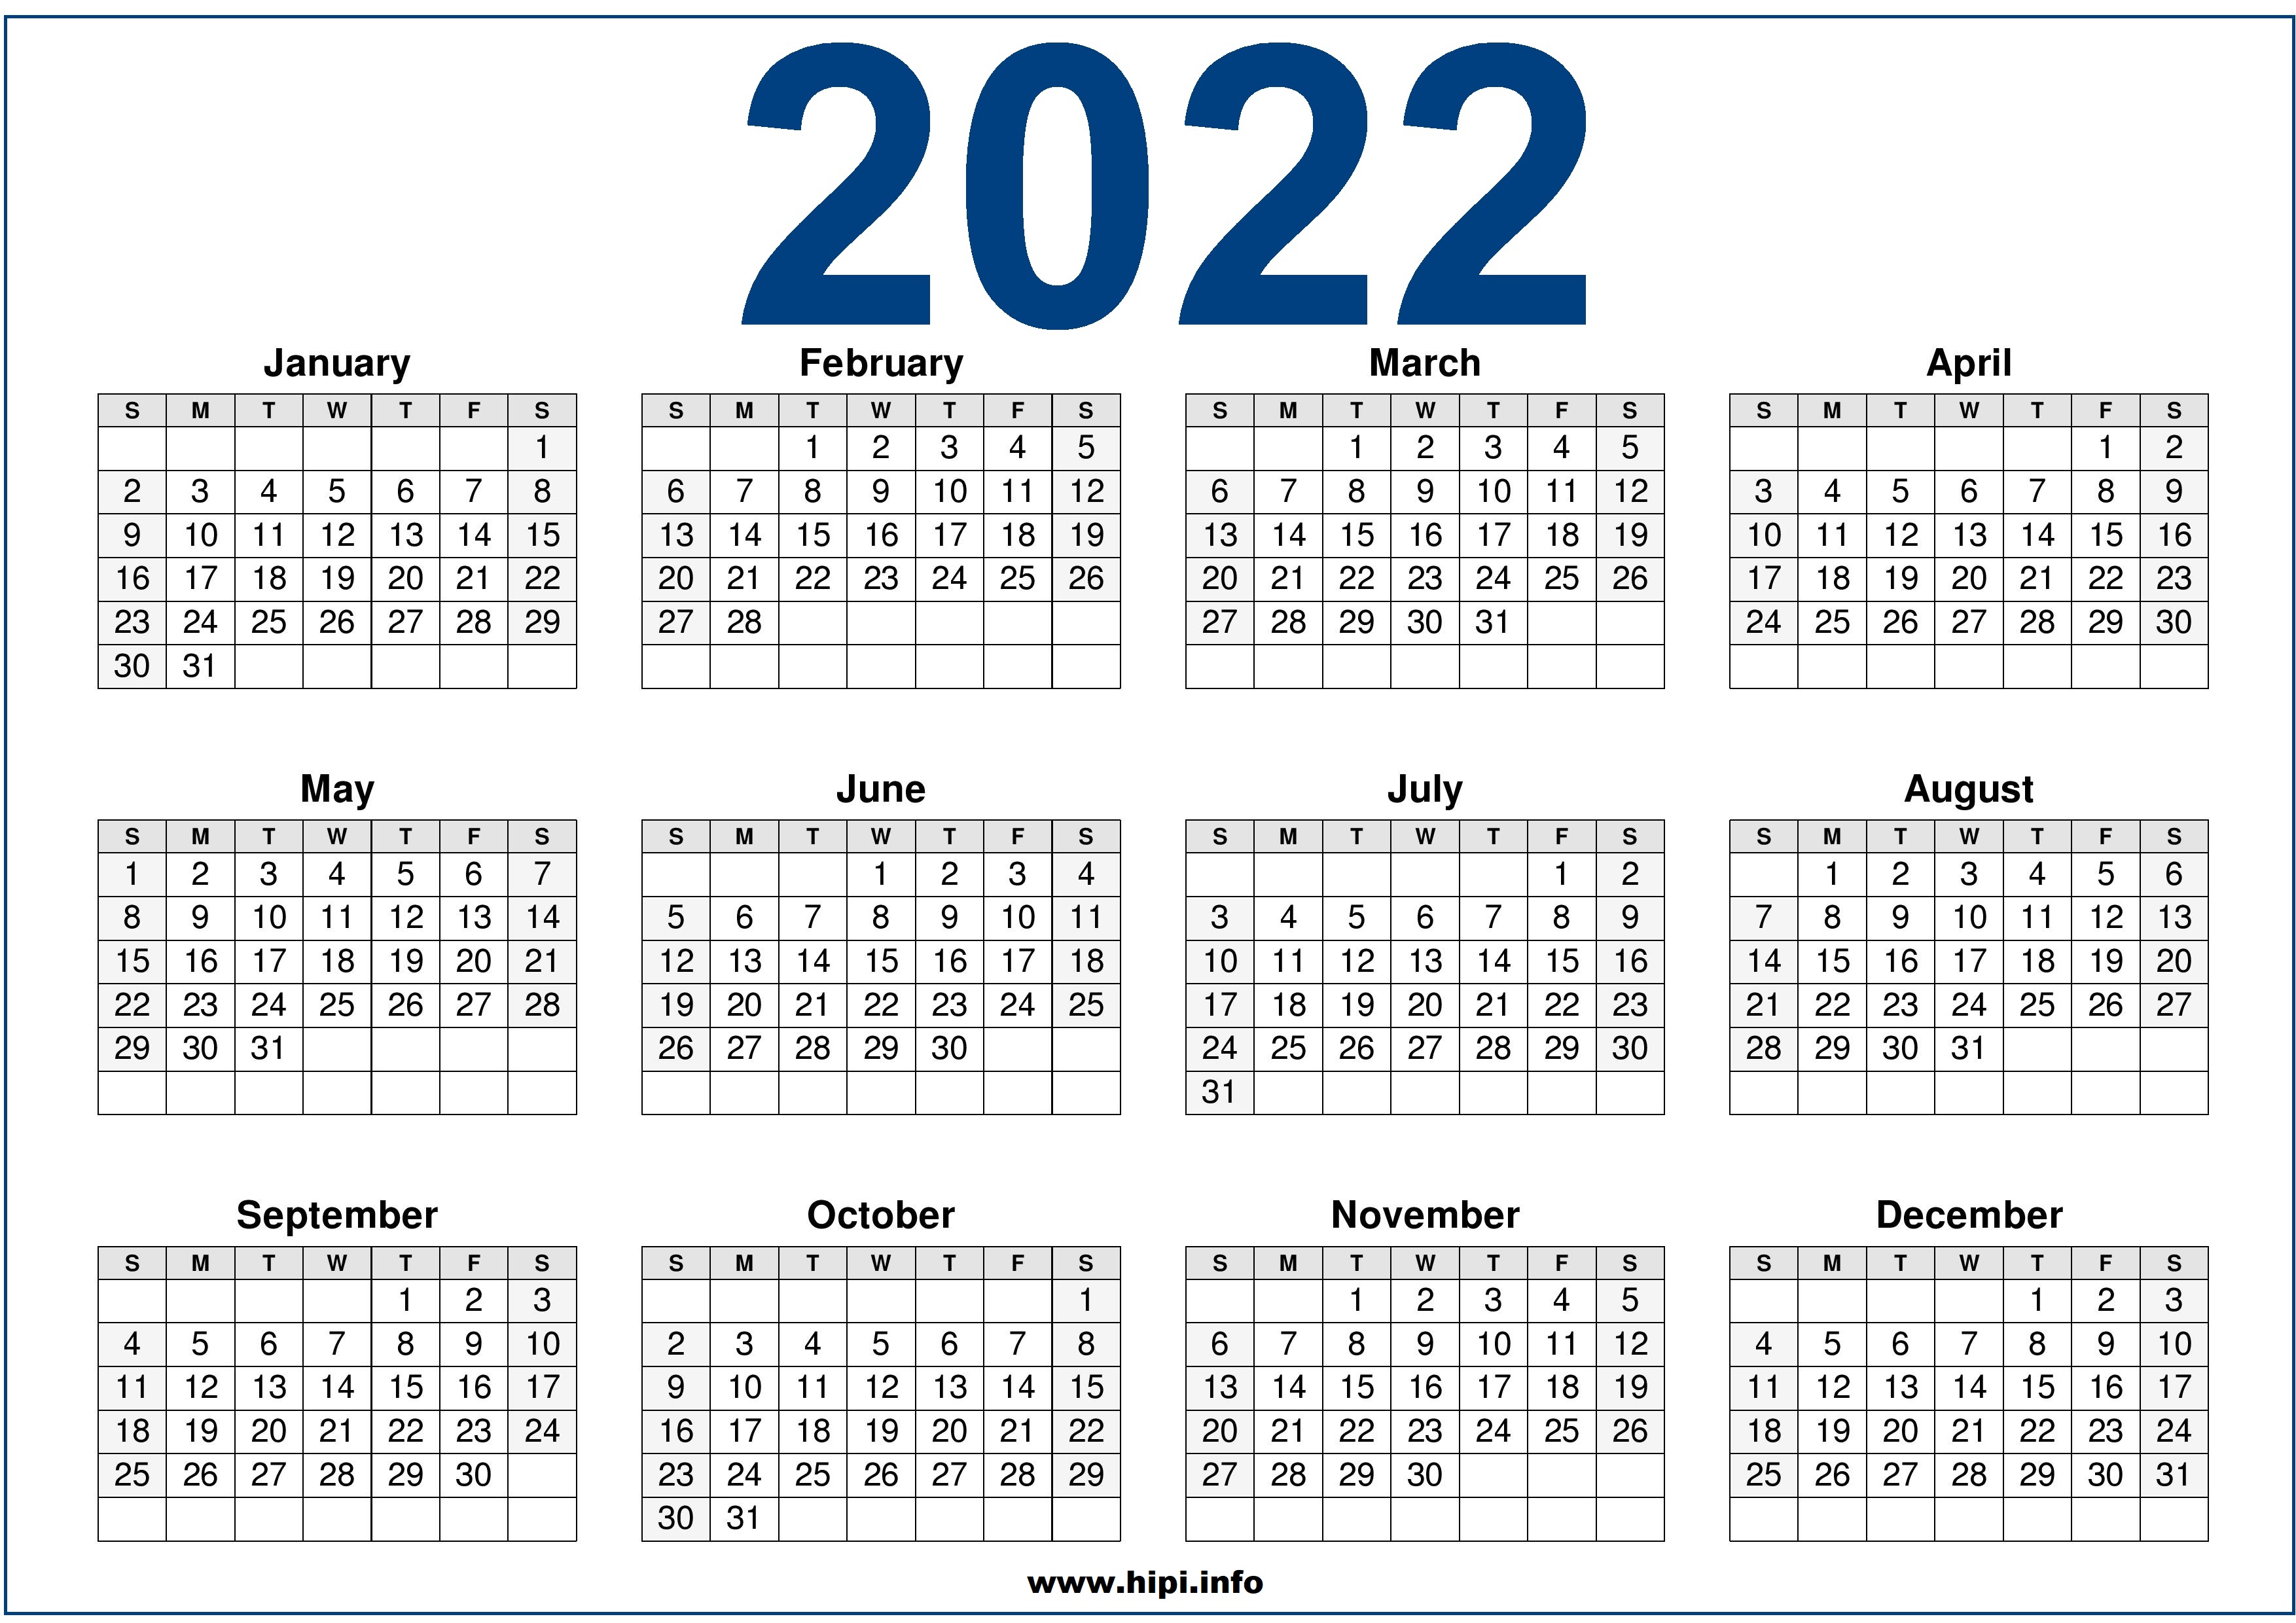 Printable Calendar 2022 One Page 2022 Calendar Printable Us One Page - Hipi.info | Calendars Printable Free